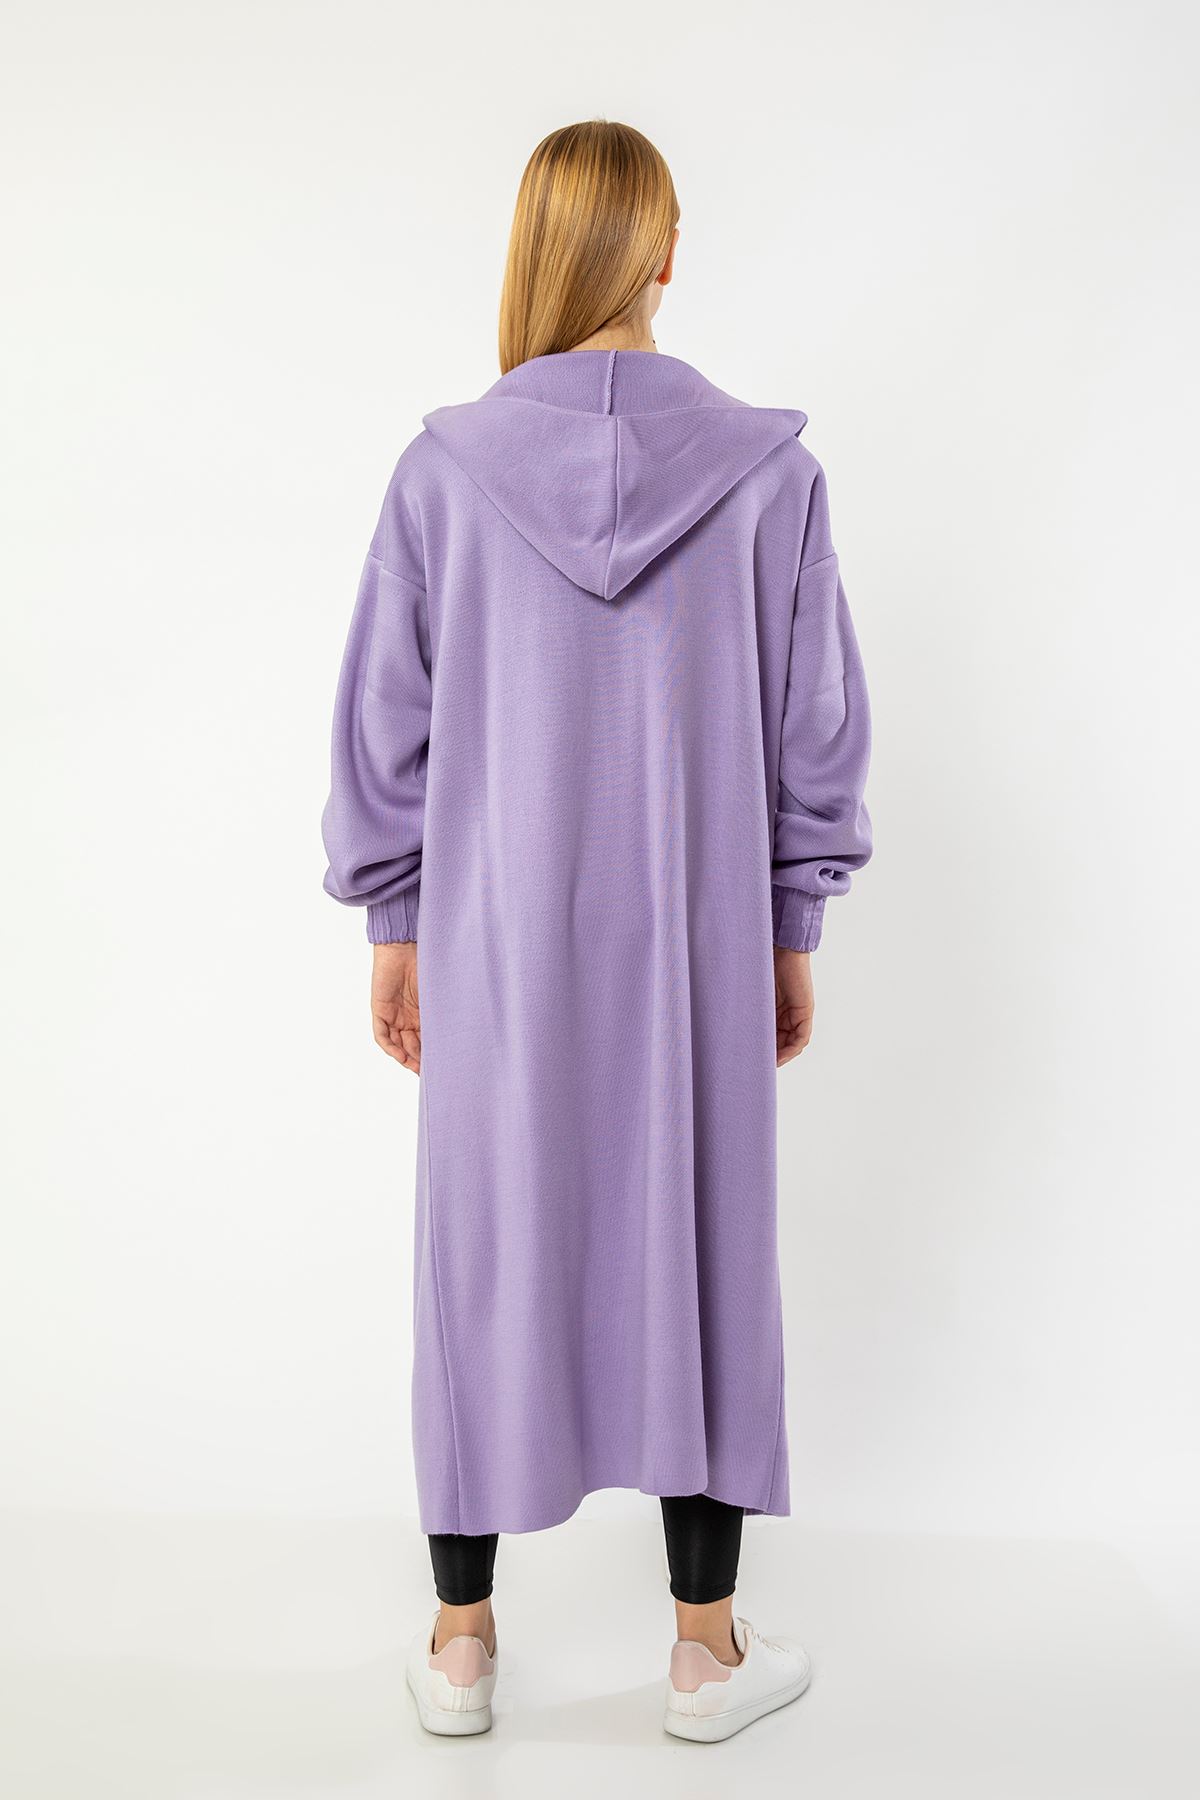 Knitwear Fabric Long Sleeve Hooded Long Oversize Women Cardigan With Belt - Lilac